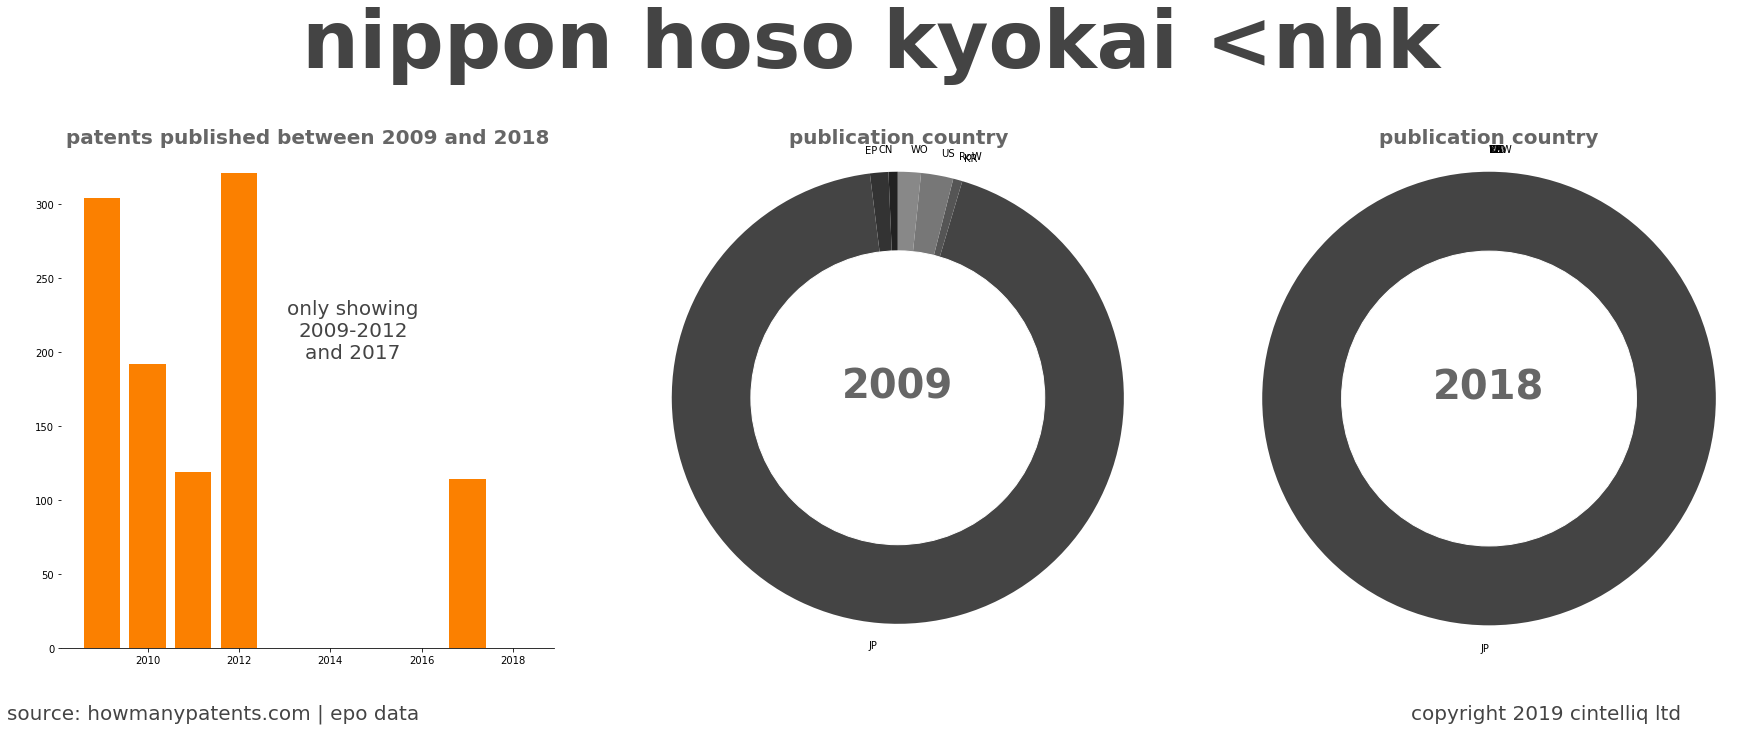 summary of patents for Nippon Hoso Kyokai <Nhk